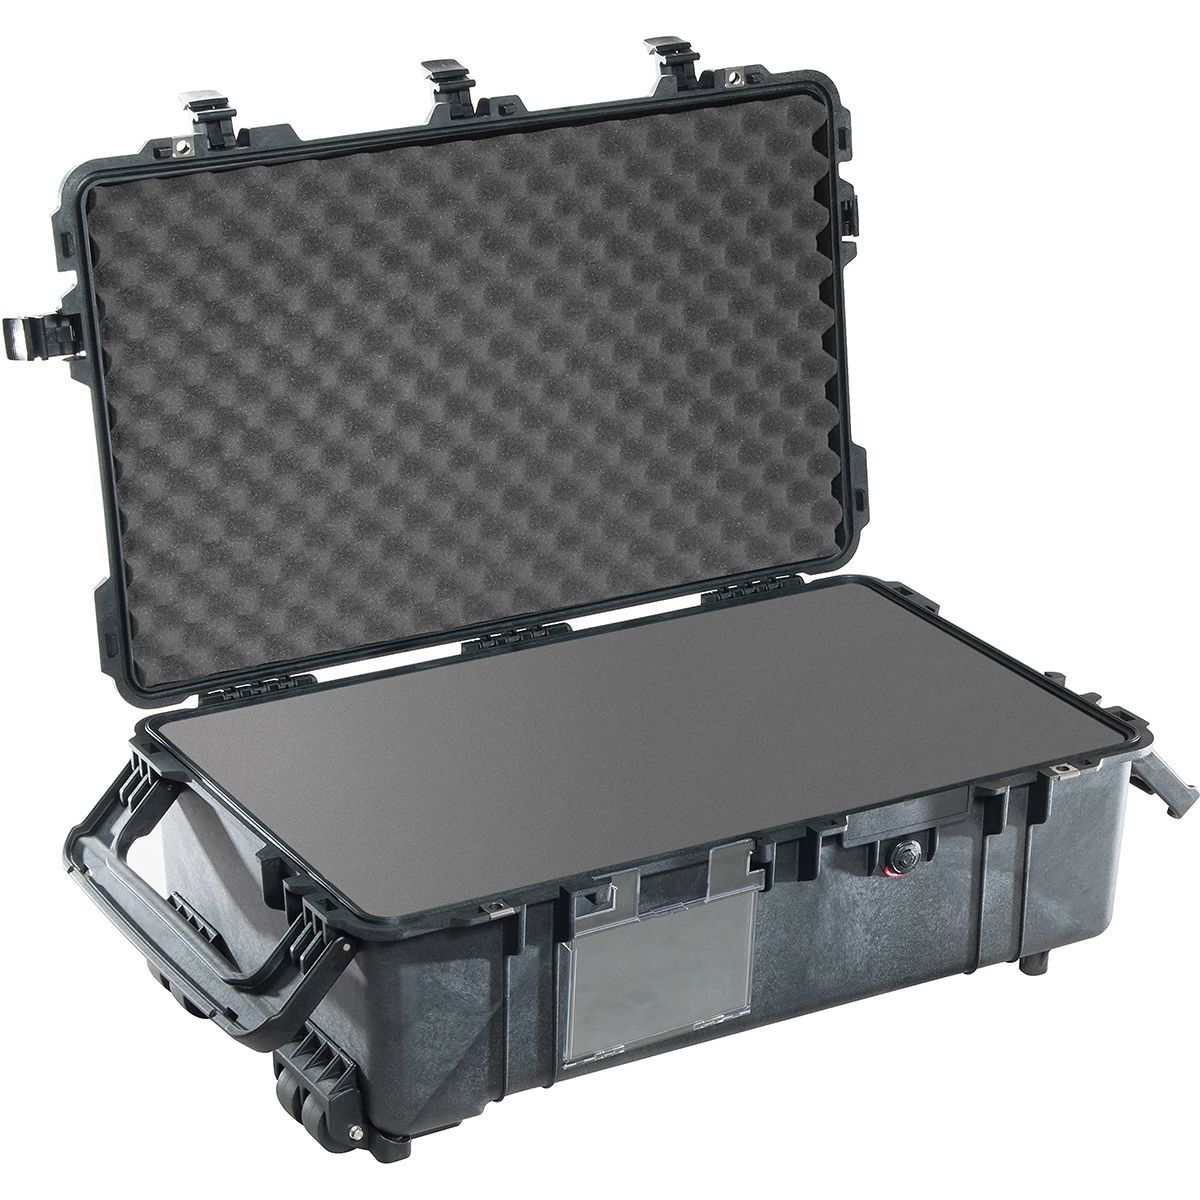 Peli 1670 Waterproof Plastic Equipment case With Wheels, 788 x 492 x 284mm